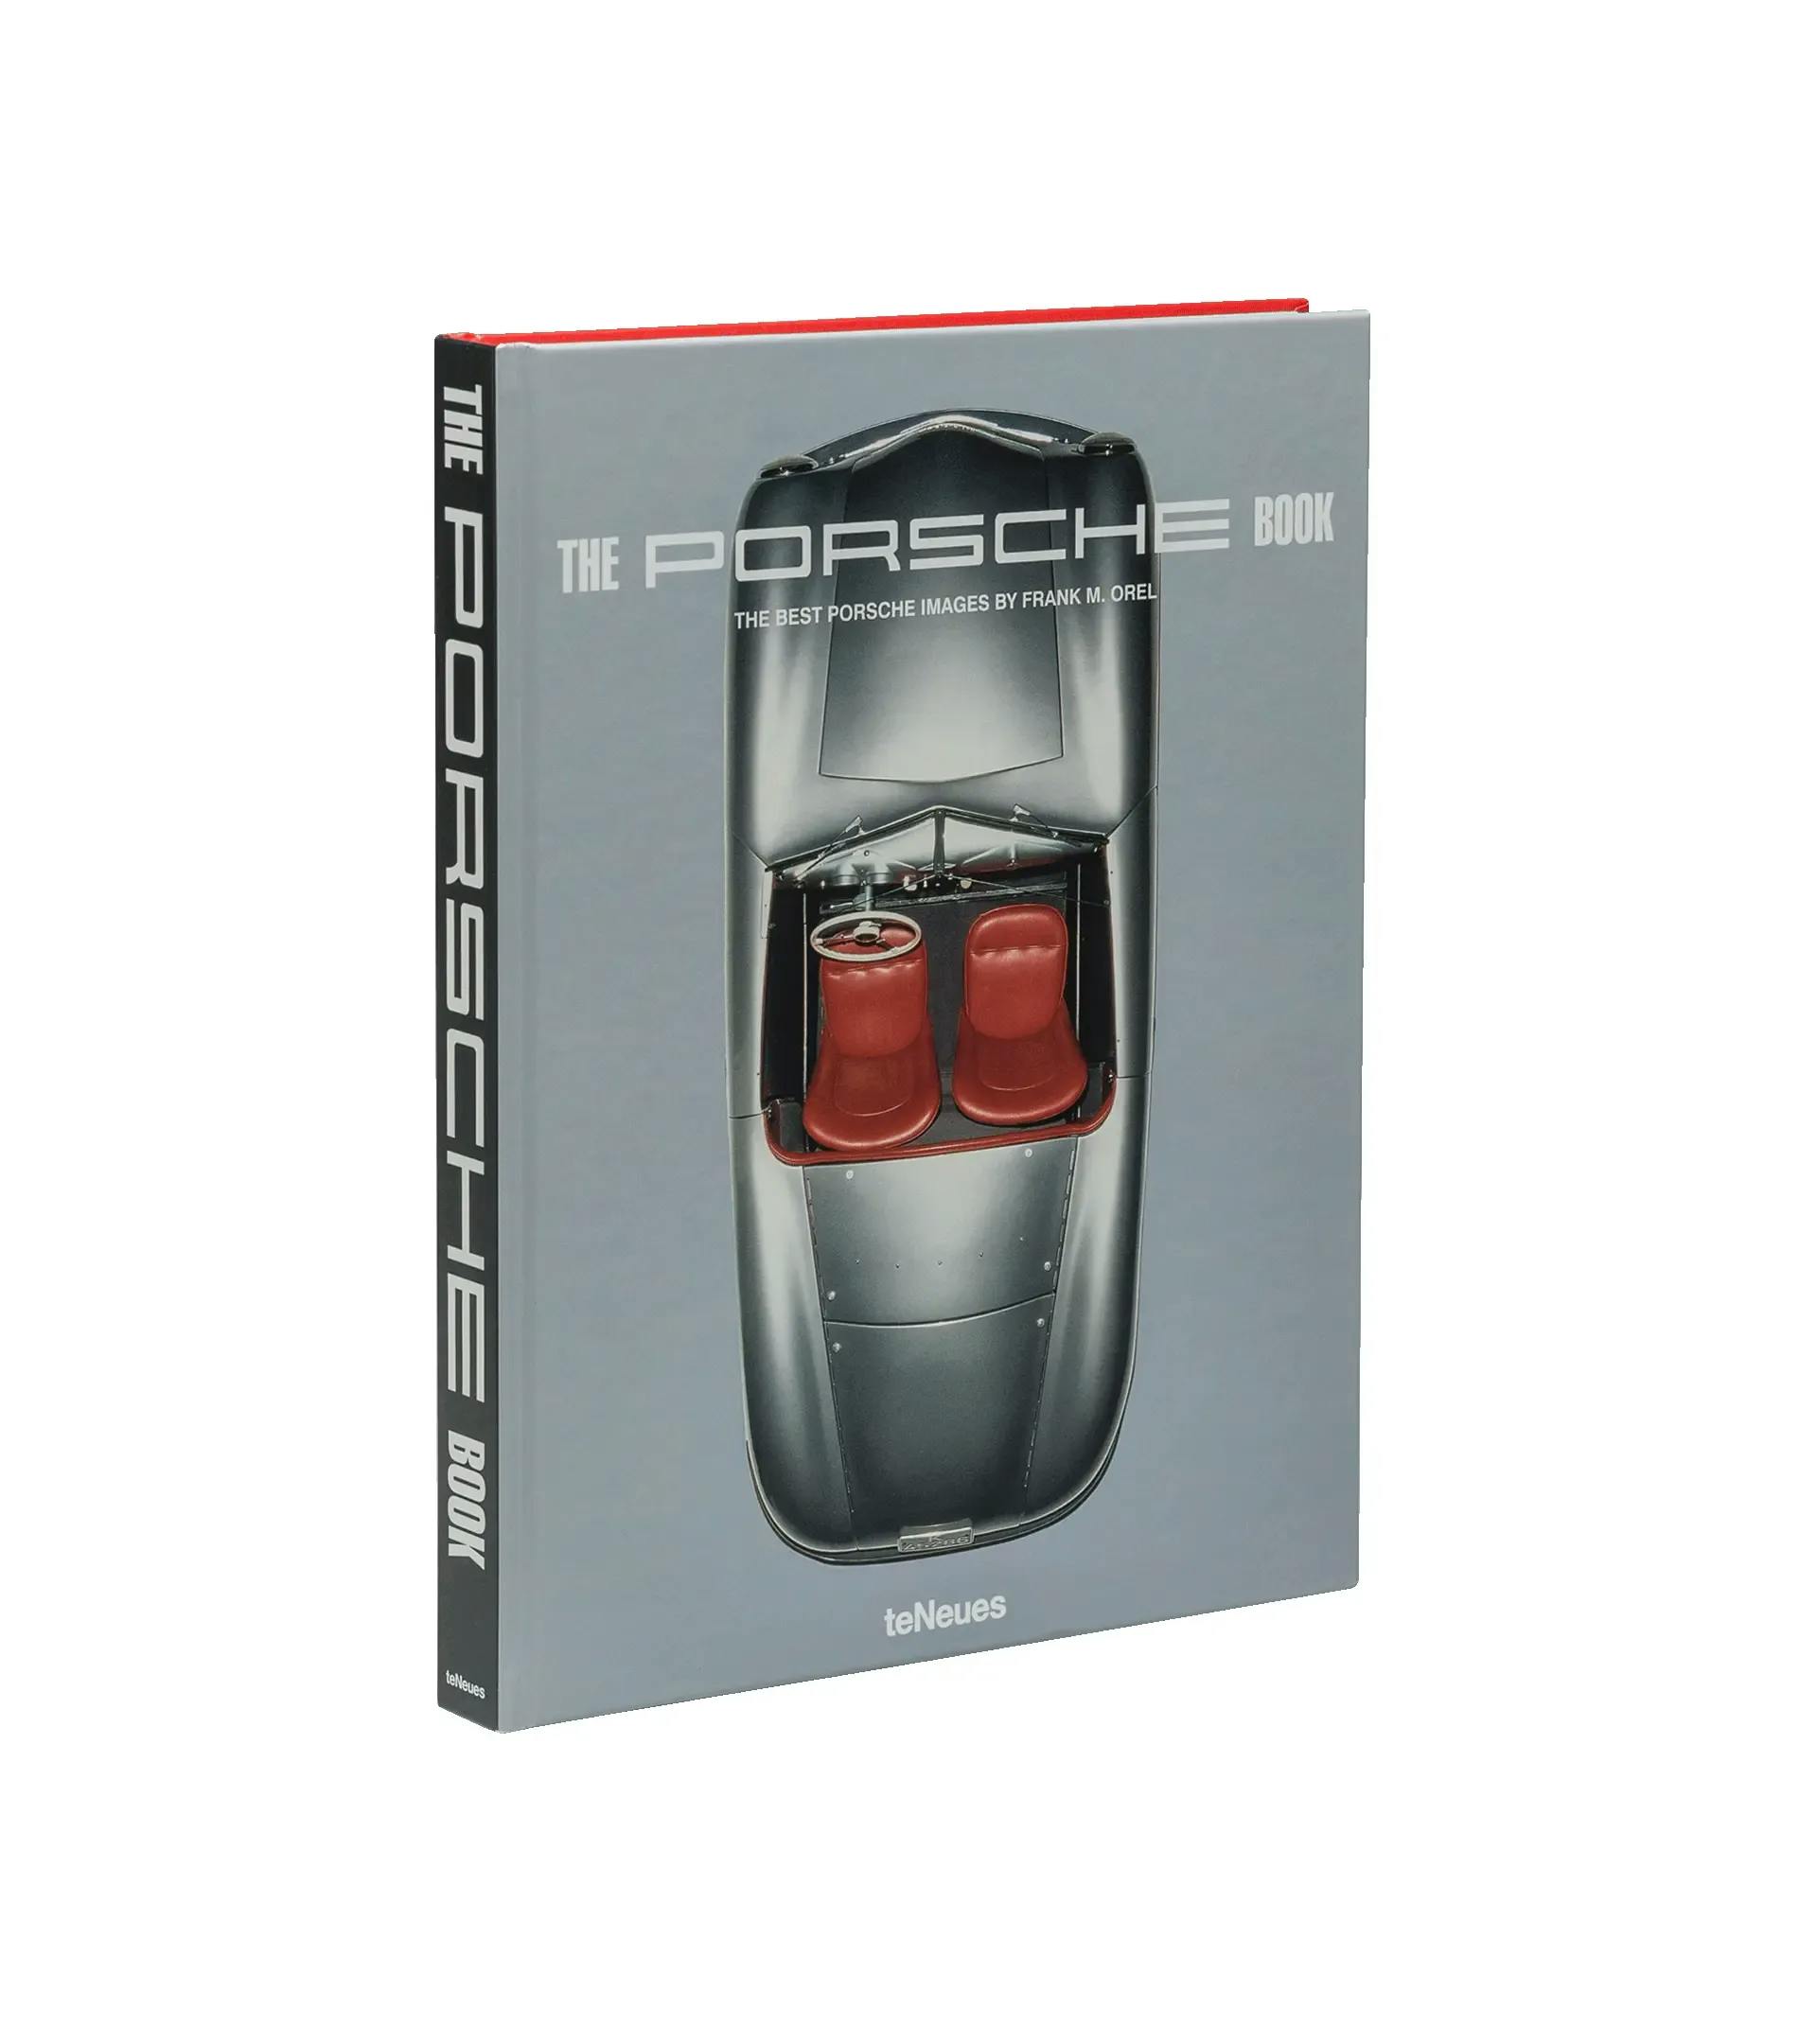 The Porsche Book - Las mejores imágenes de Porsche por Frank M. Orel 1